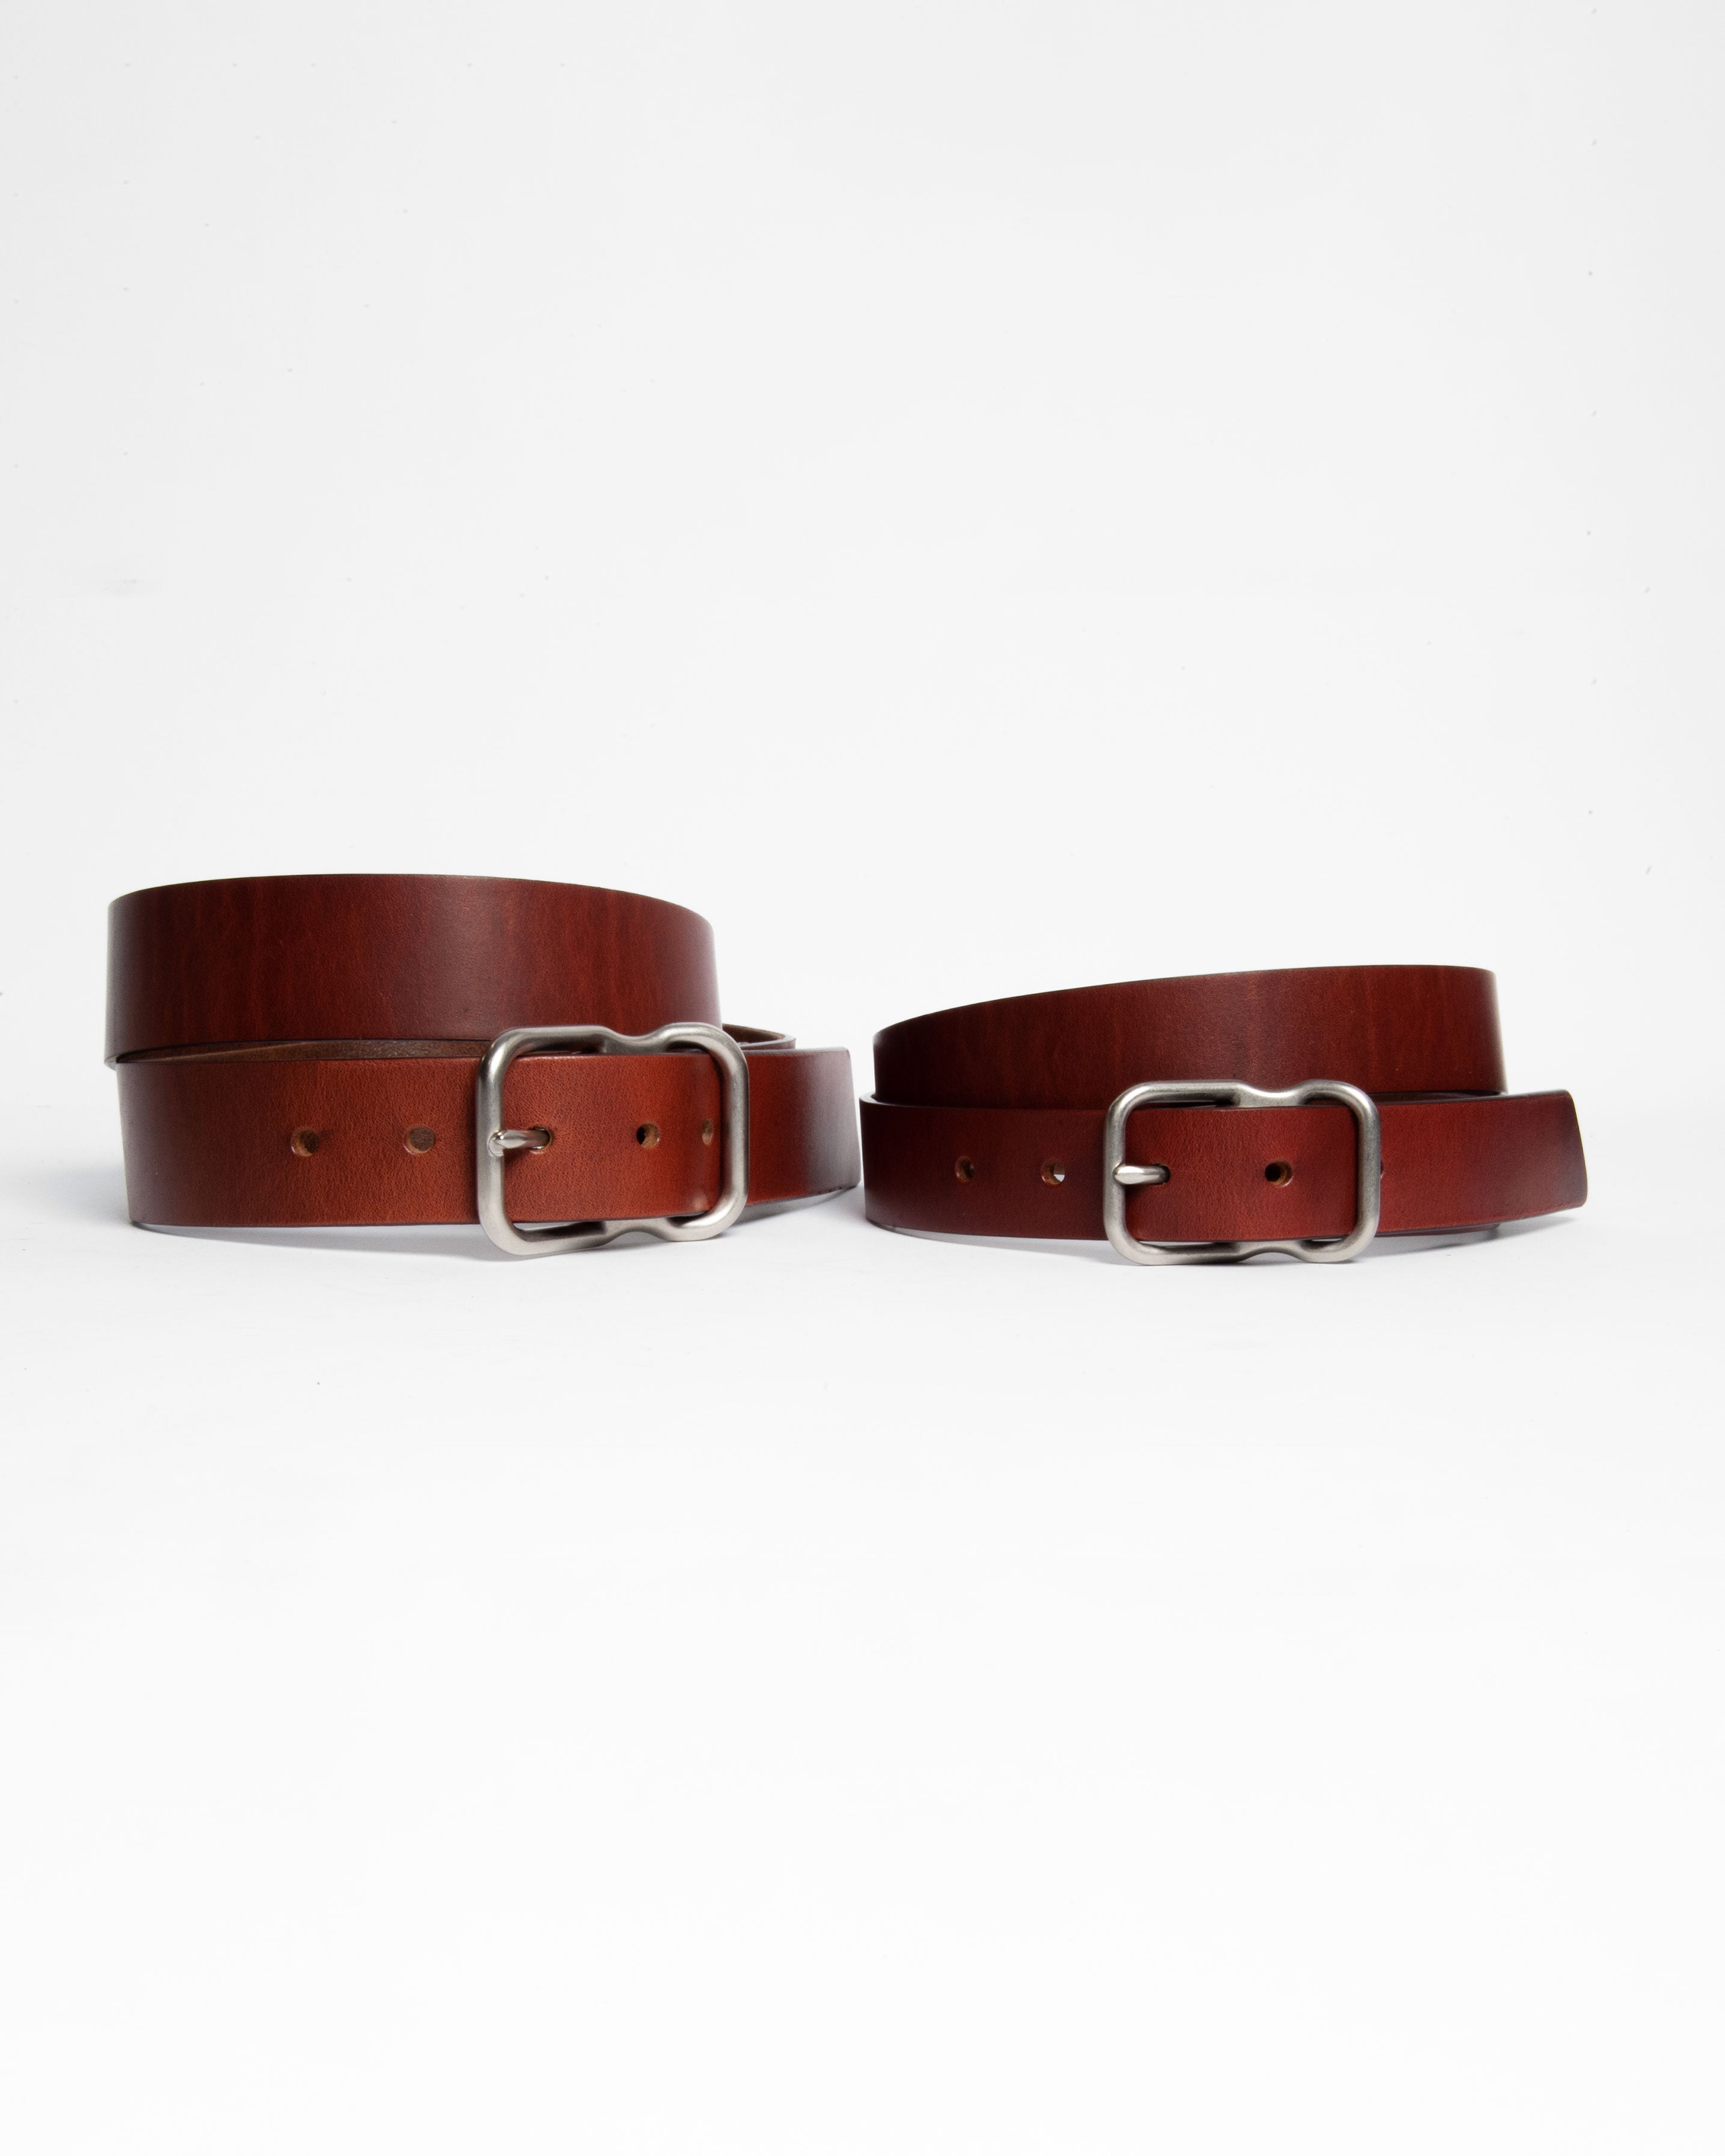 112 Signature Leather Belt - Chestnut - Nickel